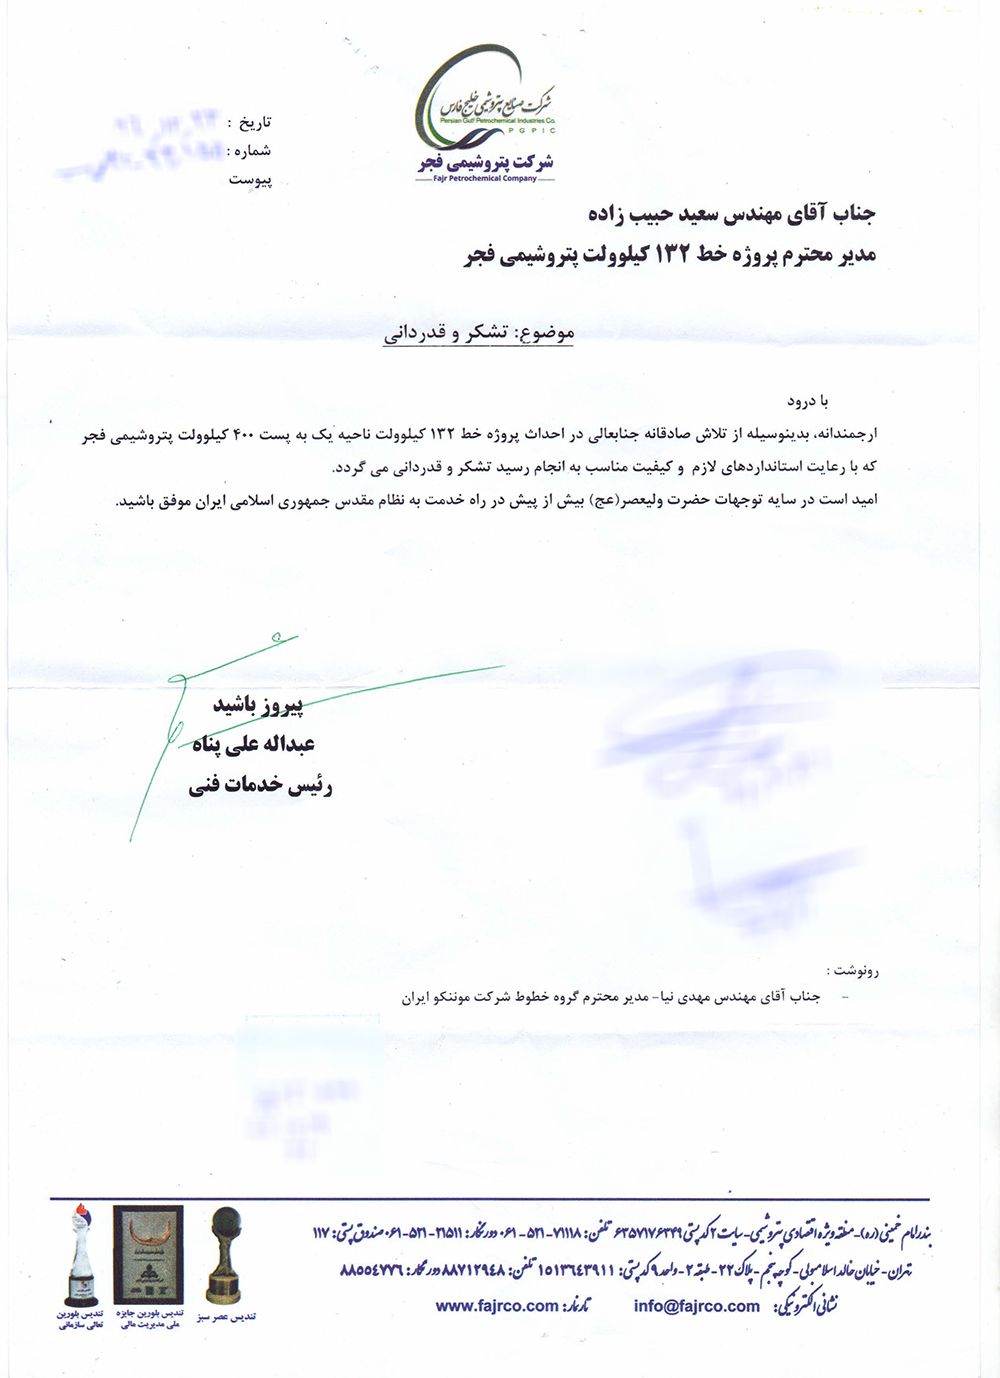  Certificate of Appreciation from Fajr Petrochemical Company